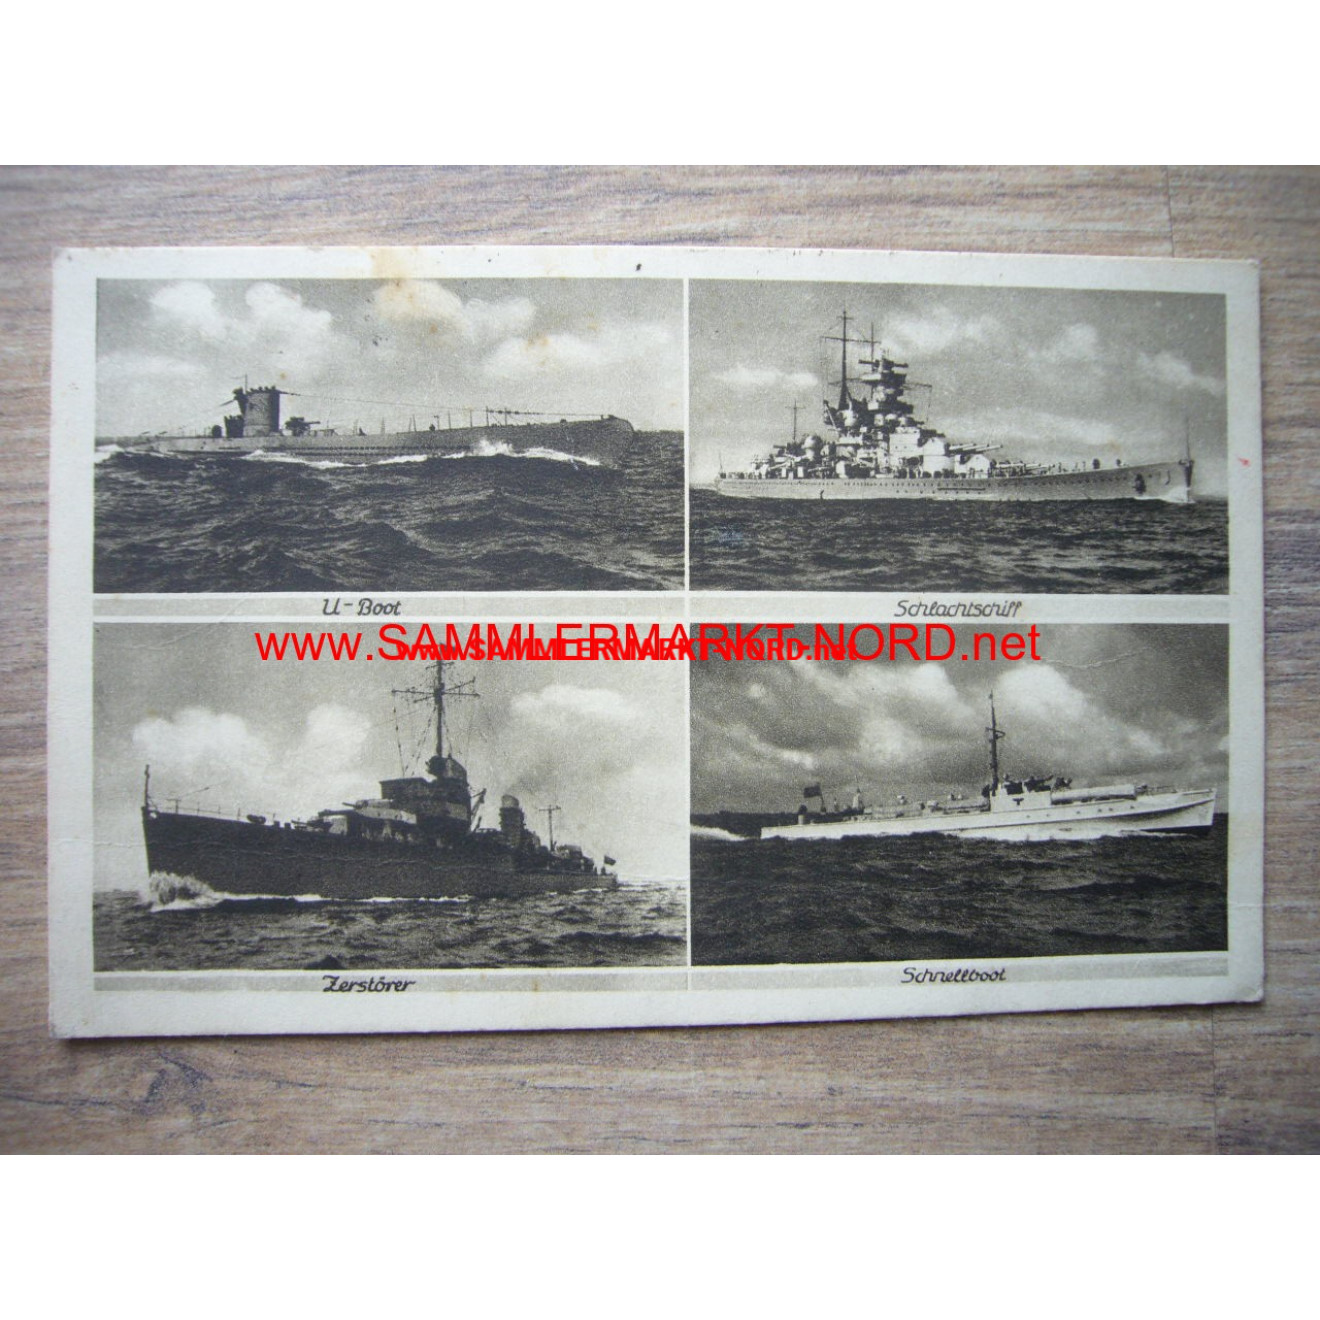 Kriegsmarine - submarine, battleship, etc. - postcard